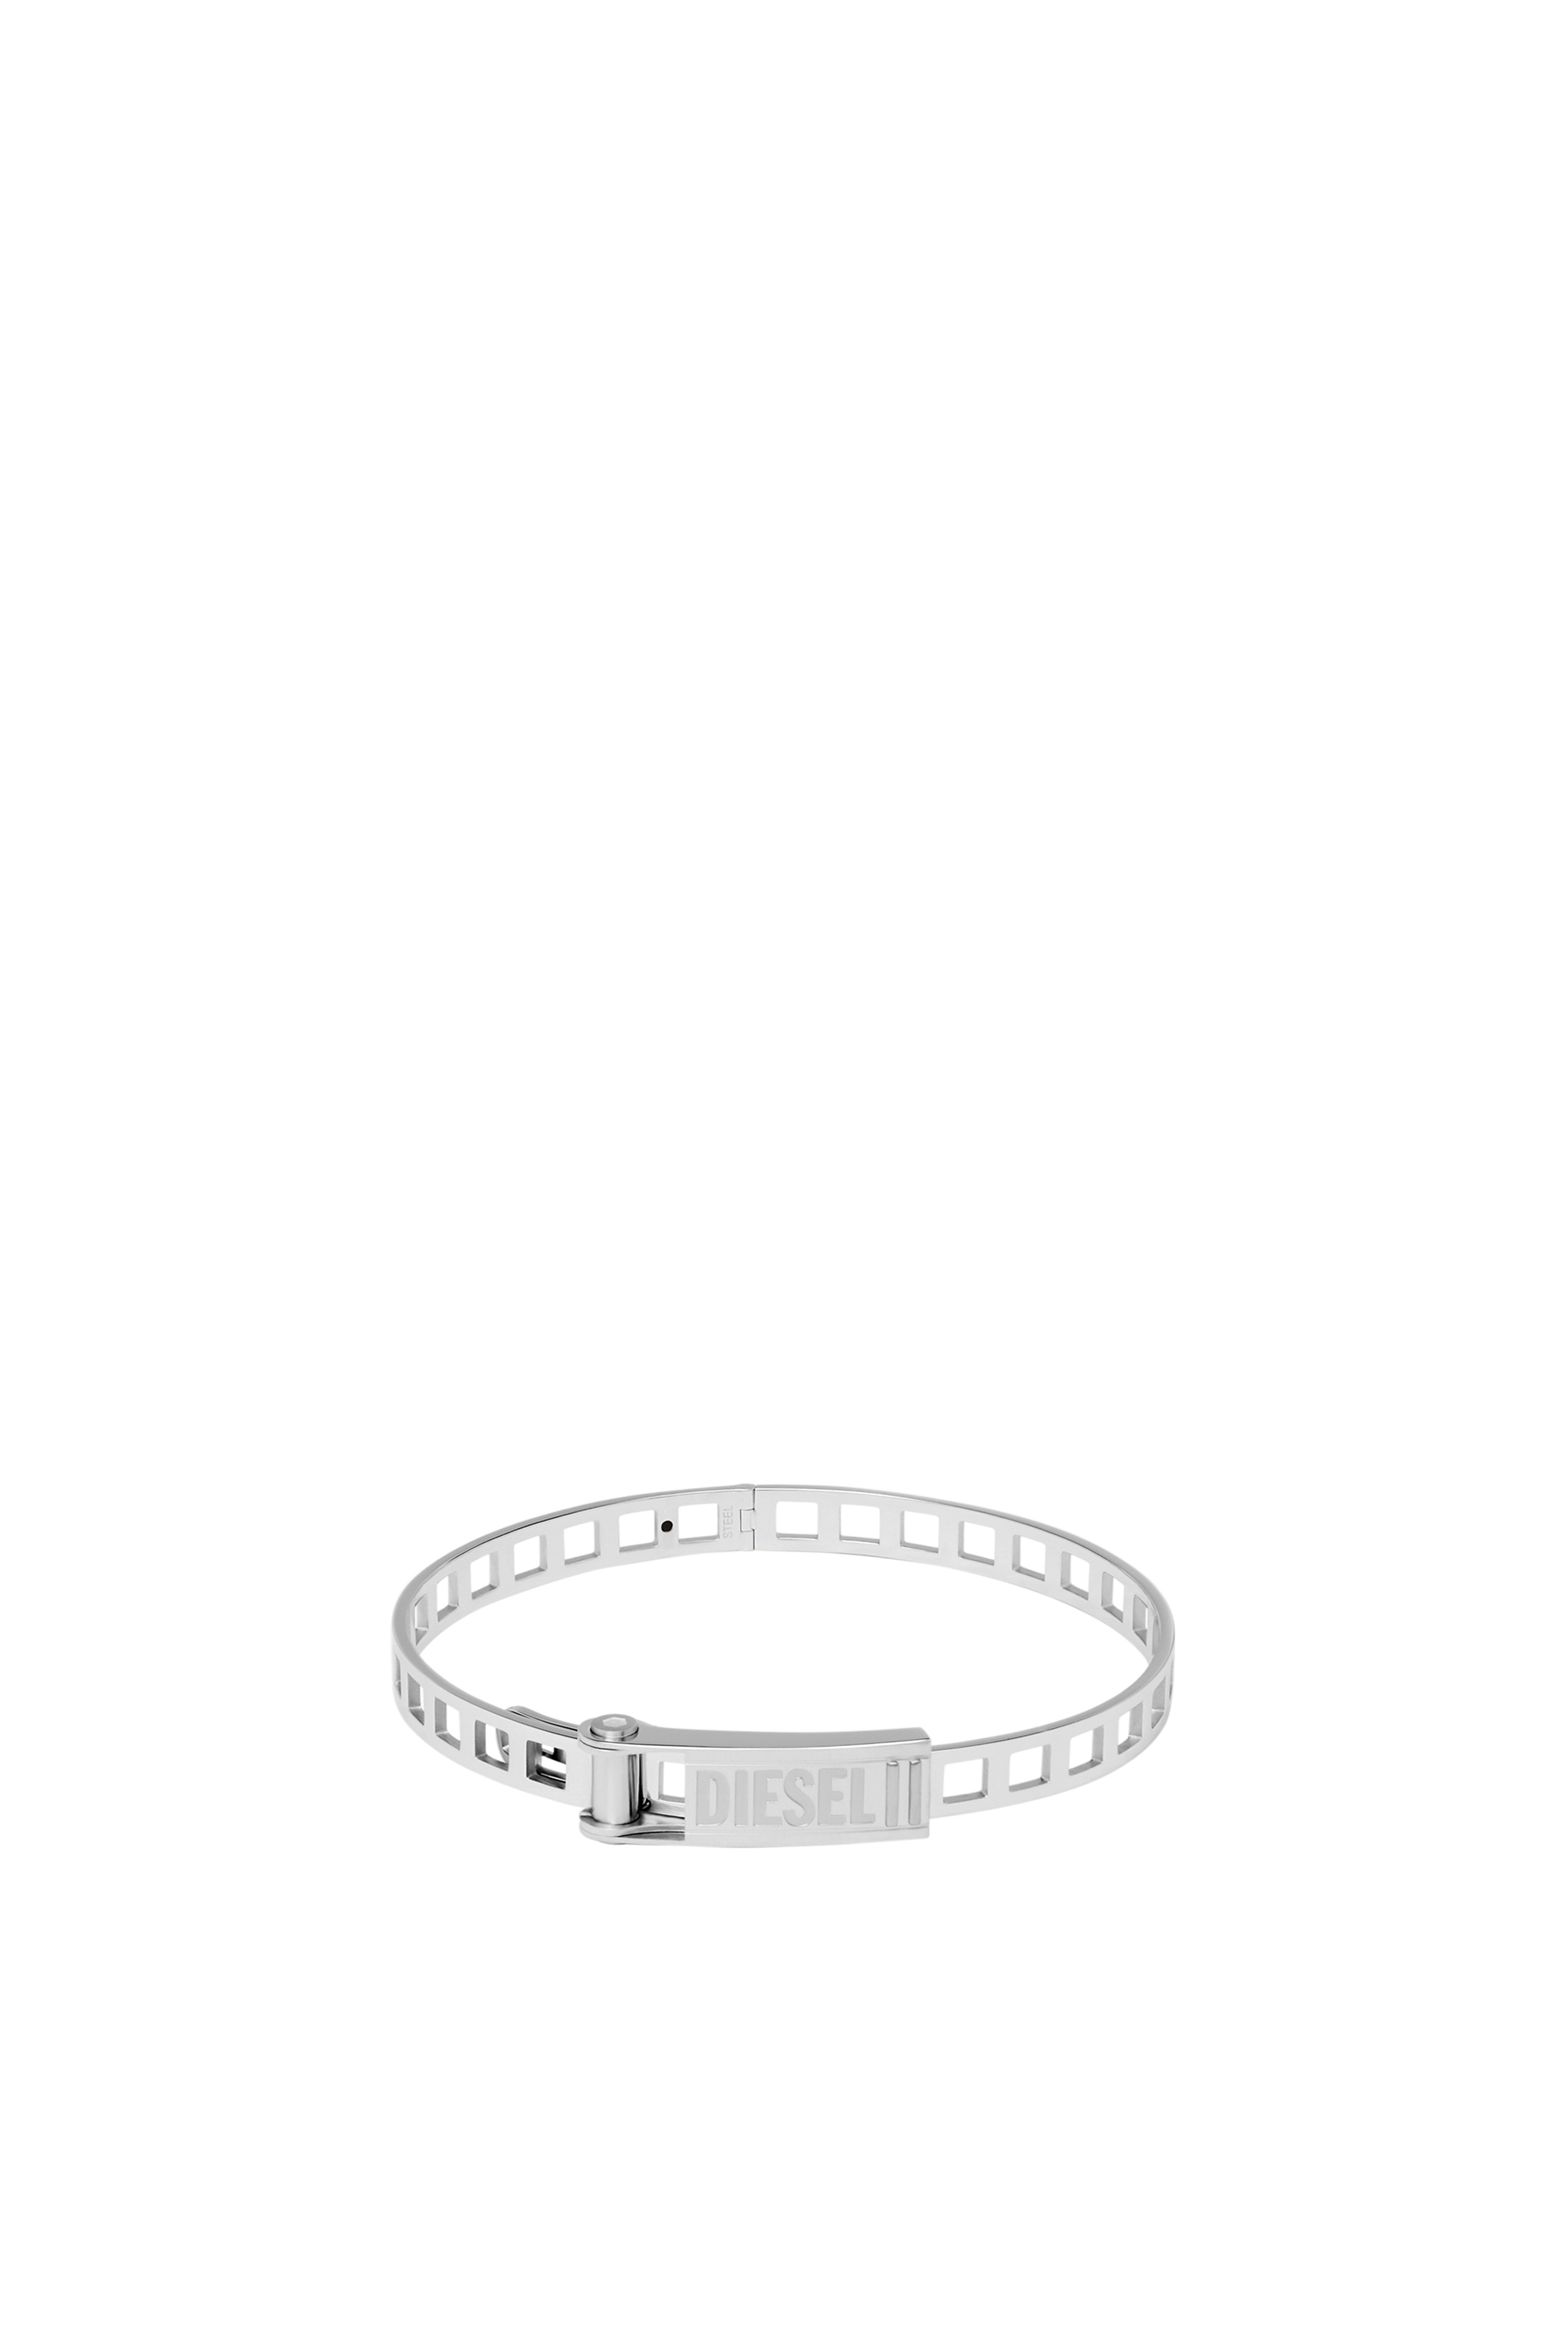 Diesel - DX1356, Unisex Stainless steel stack bracelet in Silver - Image 1